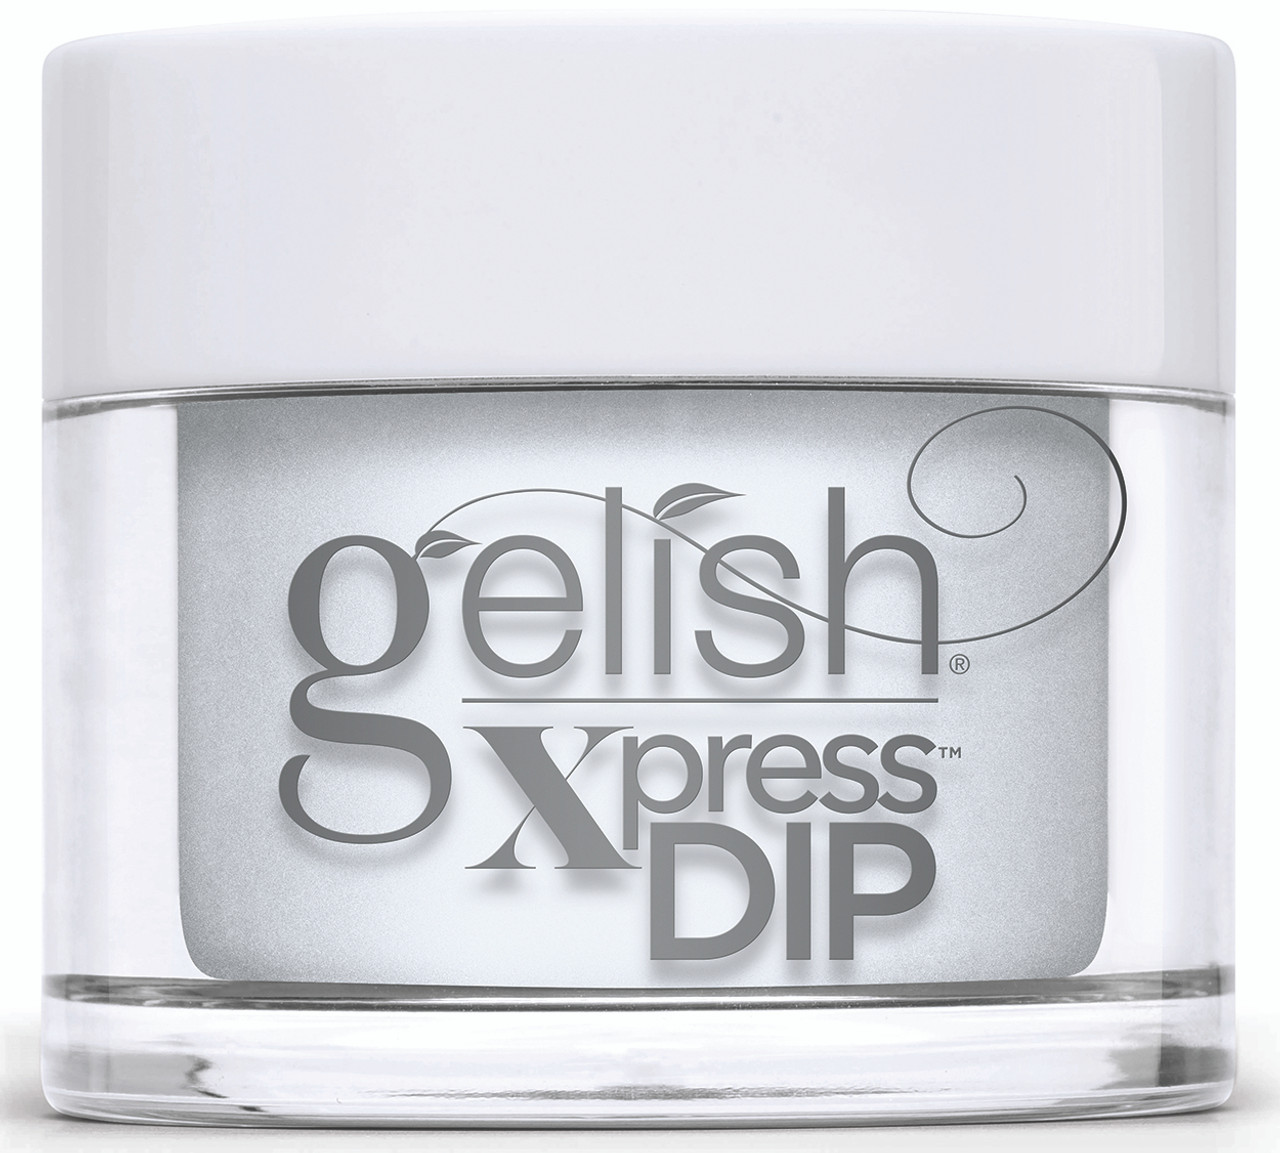 Gelish Xpress Dip Best Buds - 1.5 oz / 43 g